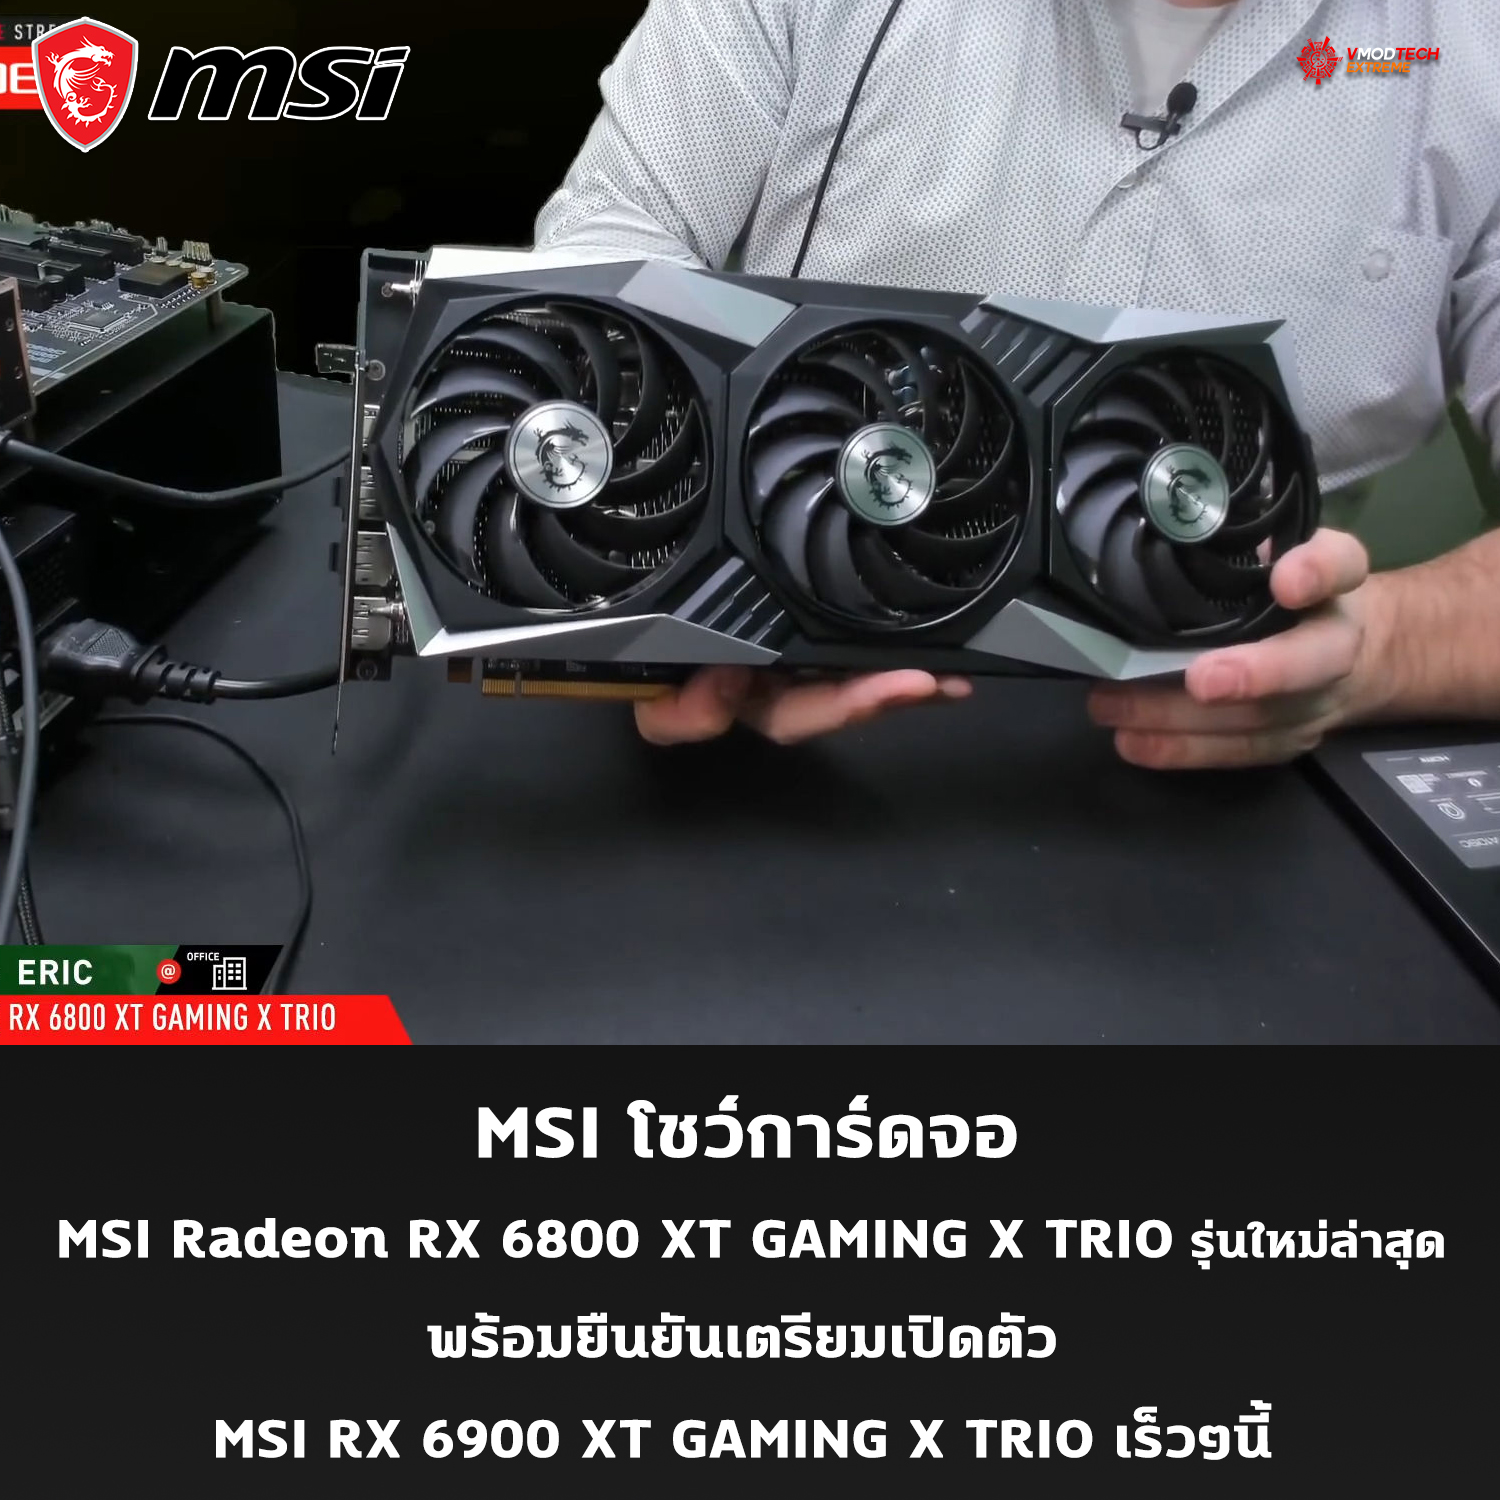 msi radeon rx 6800 xt gaming x trio MSI โชว์การ์ดจอ MSI Radeon RX 6800 XT GAMING X TRIO รุ่นใหม่ล่าสุดพร้อมยืนยันเตรียมเปิดตัว MSI RX 6900 XT GAMING X TRIO เร็วๆนี้ 